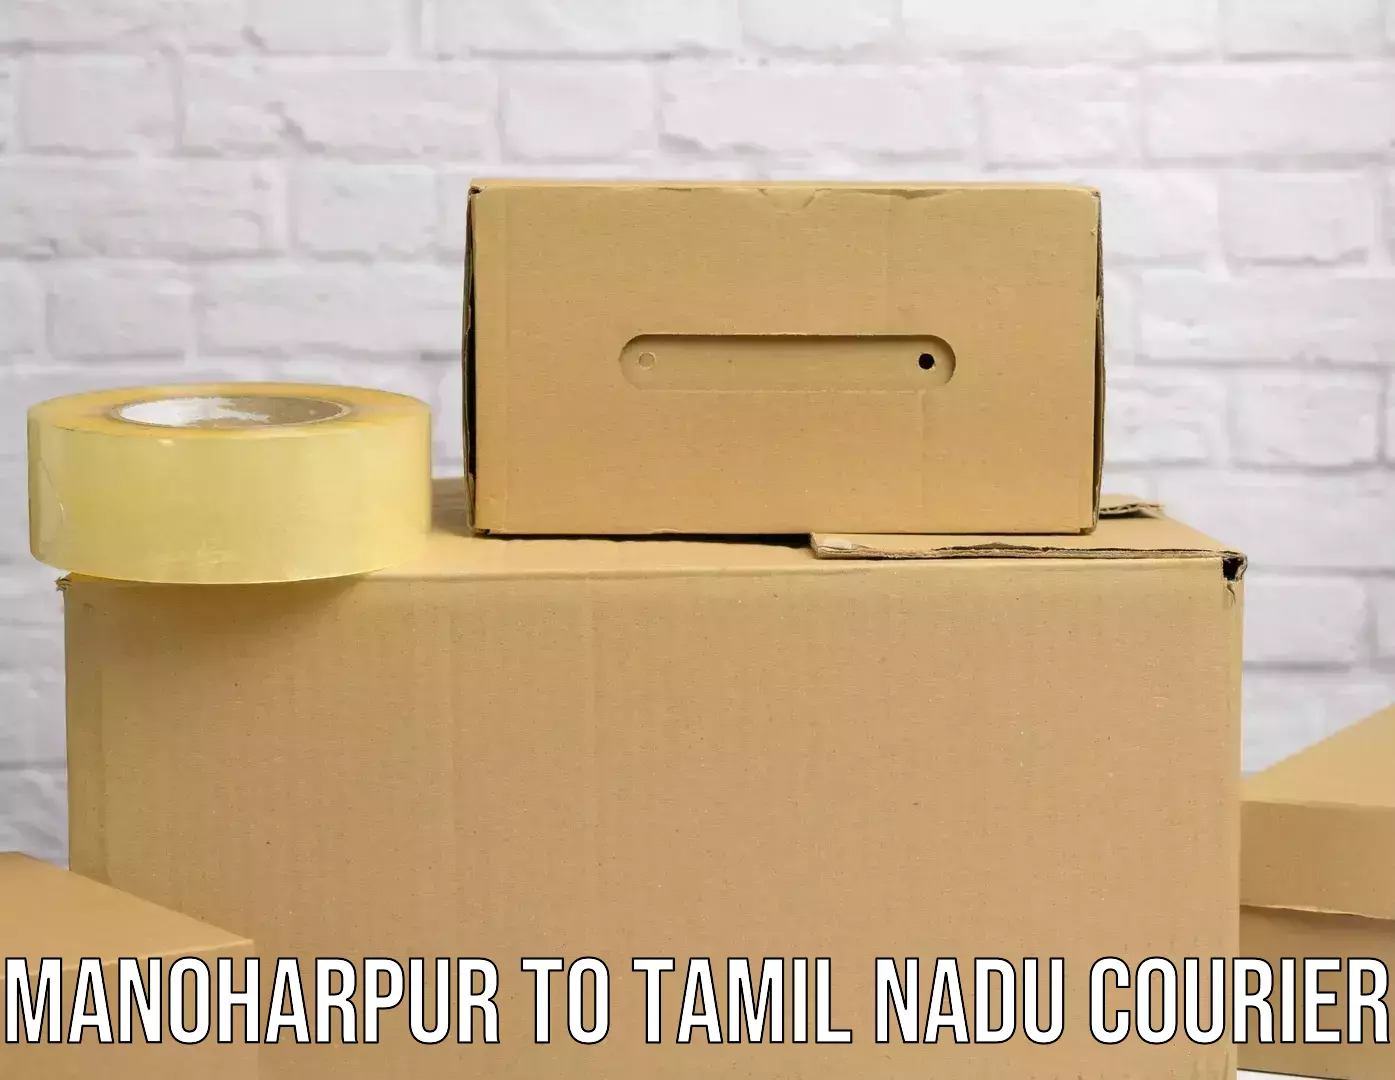 Express courier capabilities Manoharpur to Cuddalore